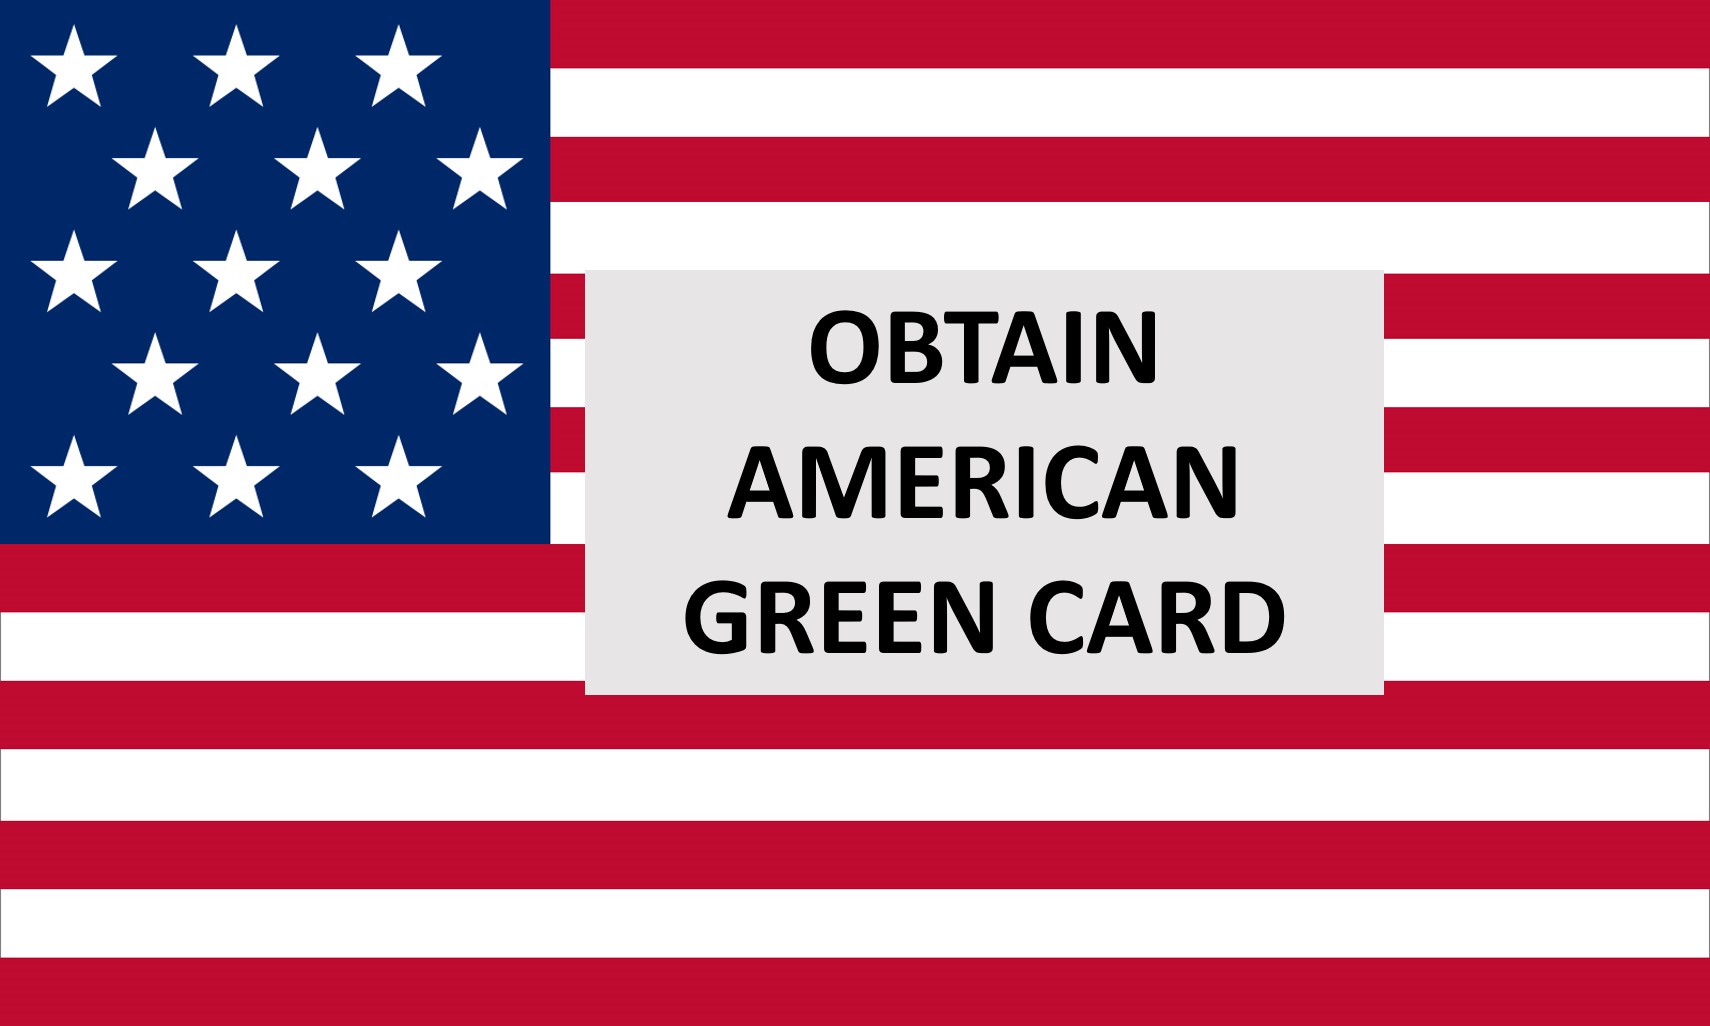 Obtain American Green Card